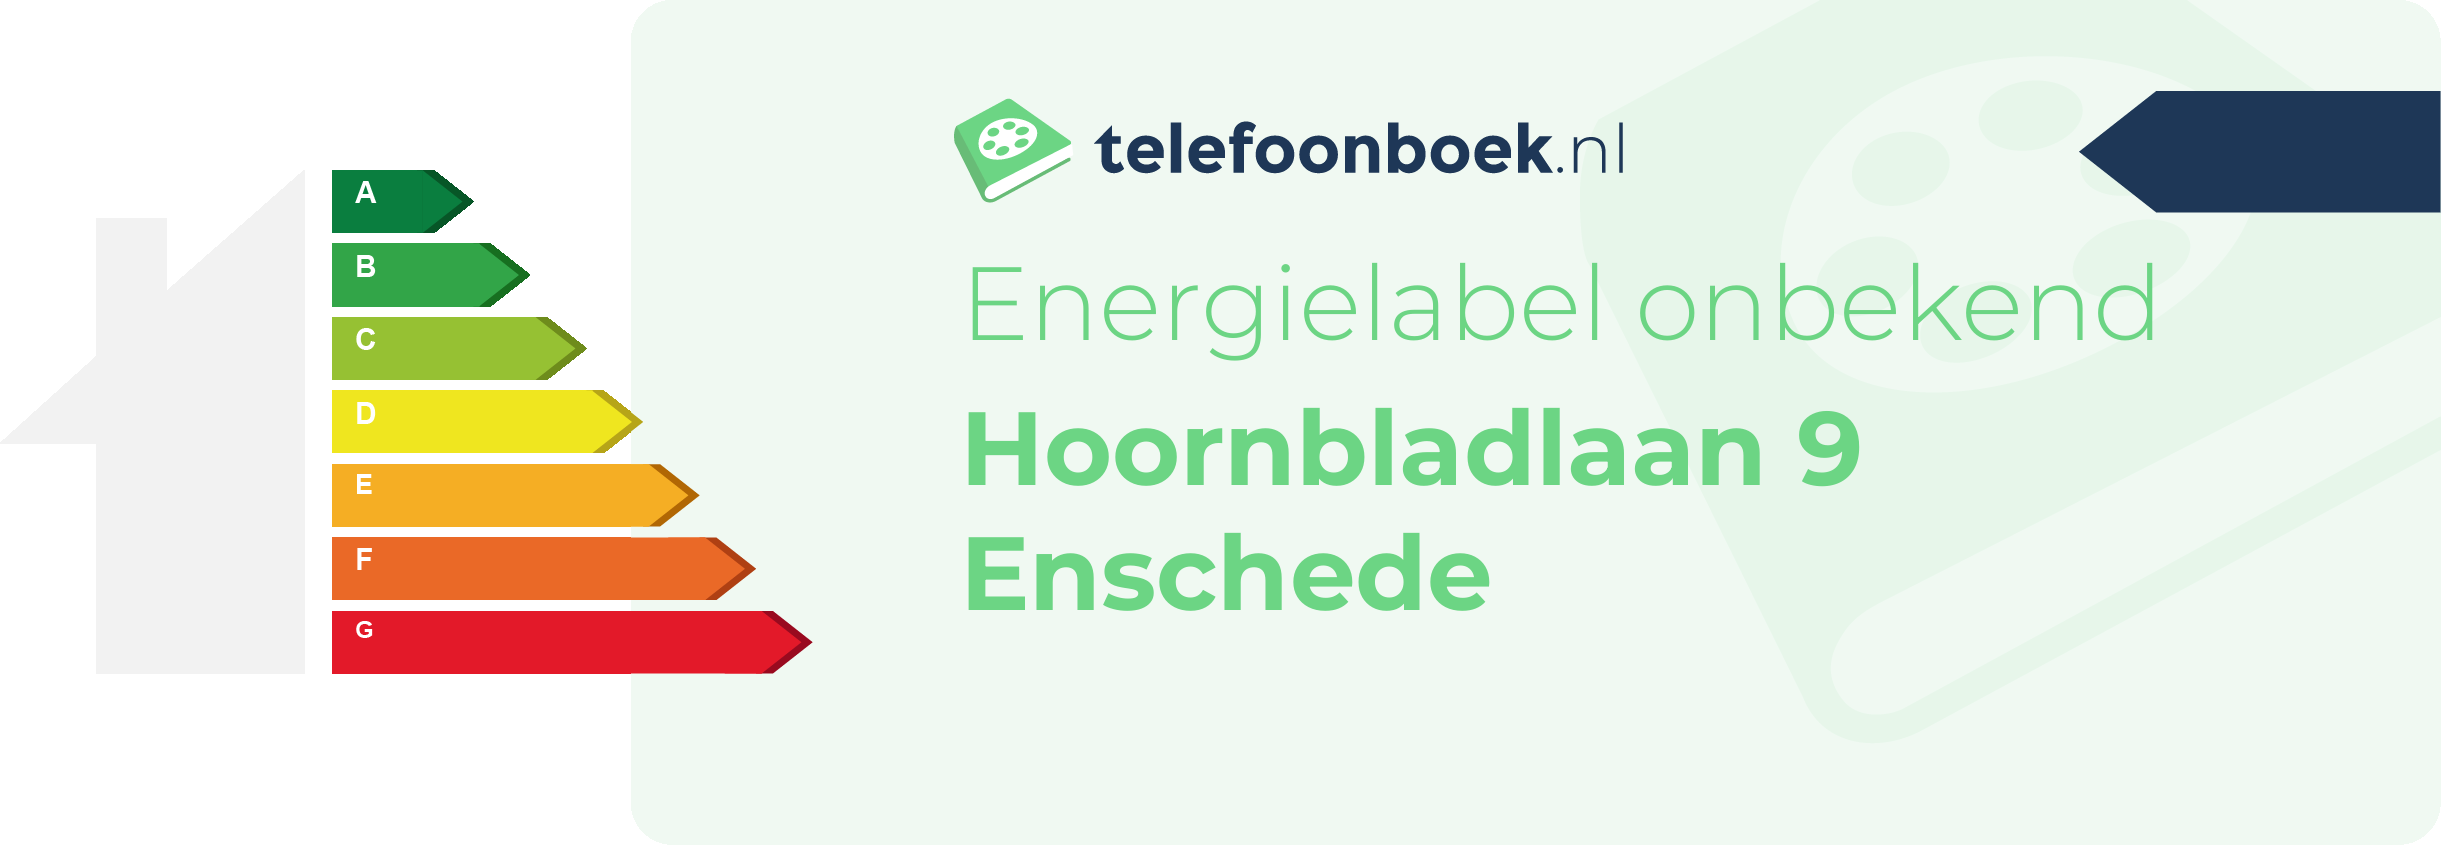 Energielabel Hoornbladlaan 9 Enschede